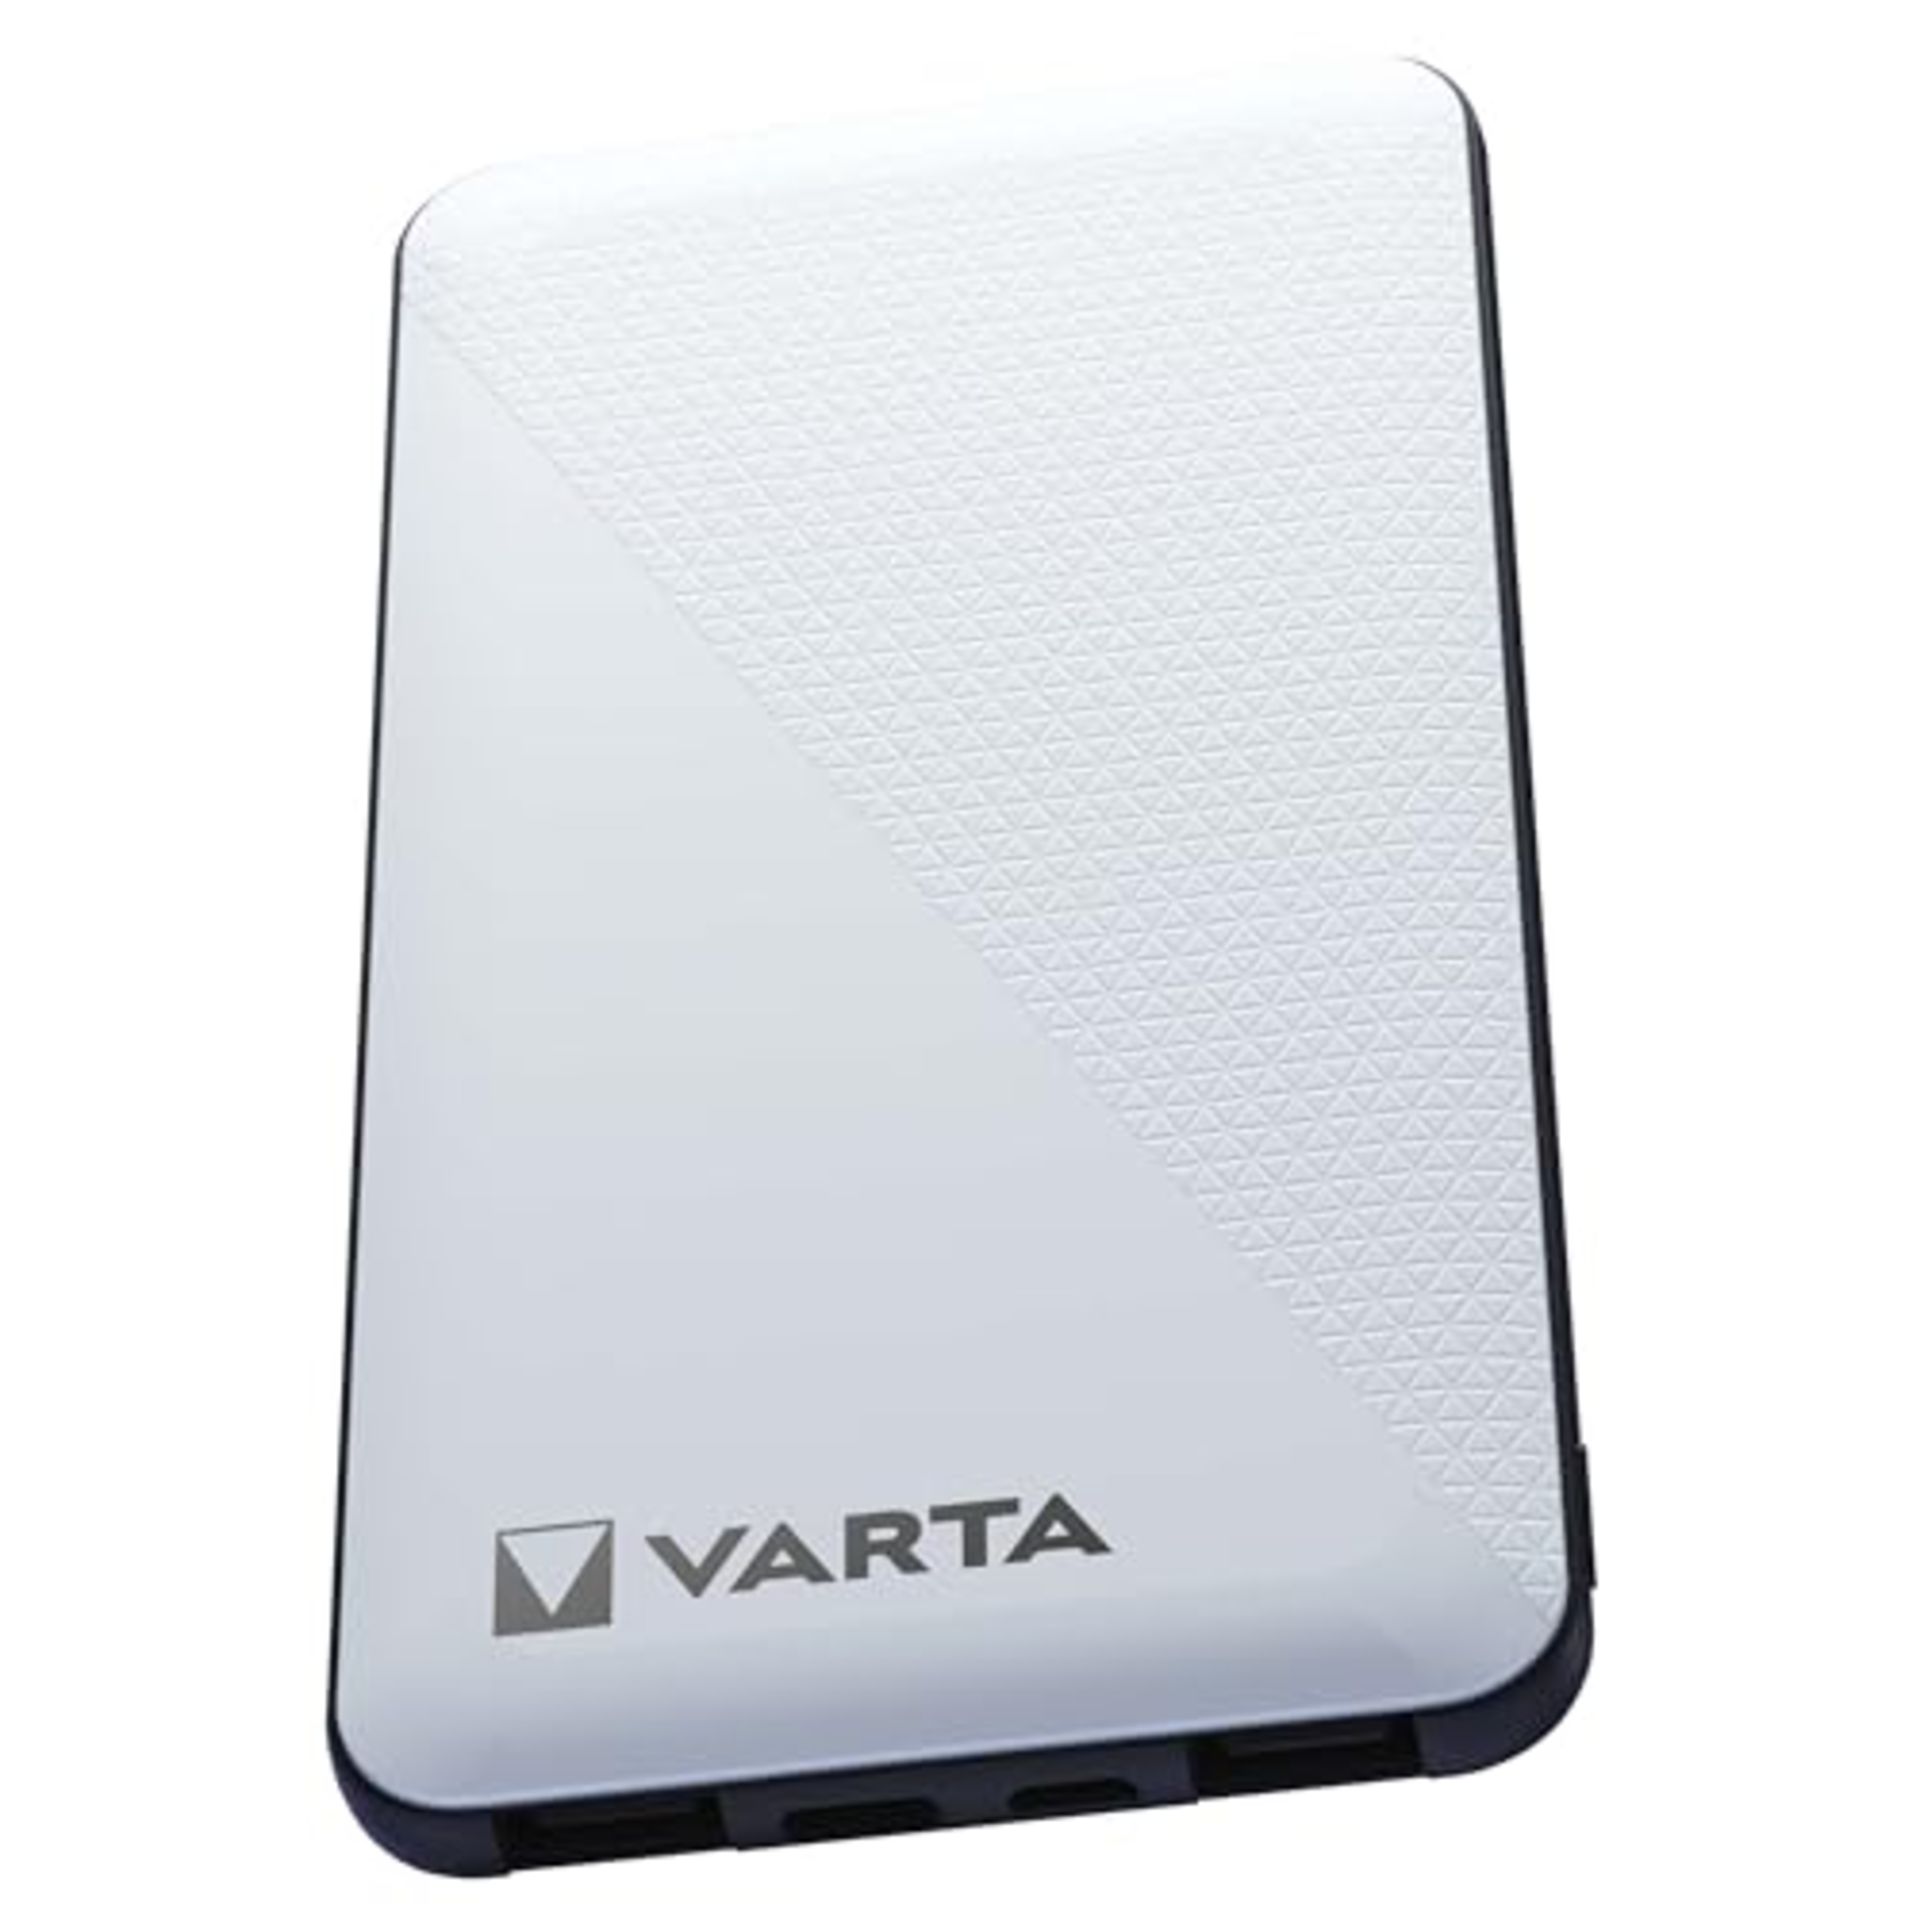 VARTA Power Bank 5000mAh, Powerbank Energy with 4 ports (1x Micro USB, 2x USB A, 1x US